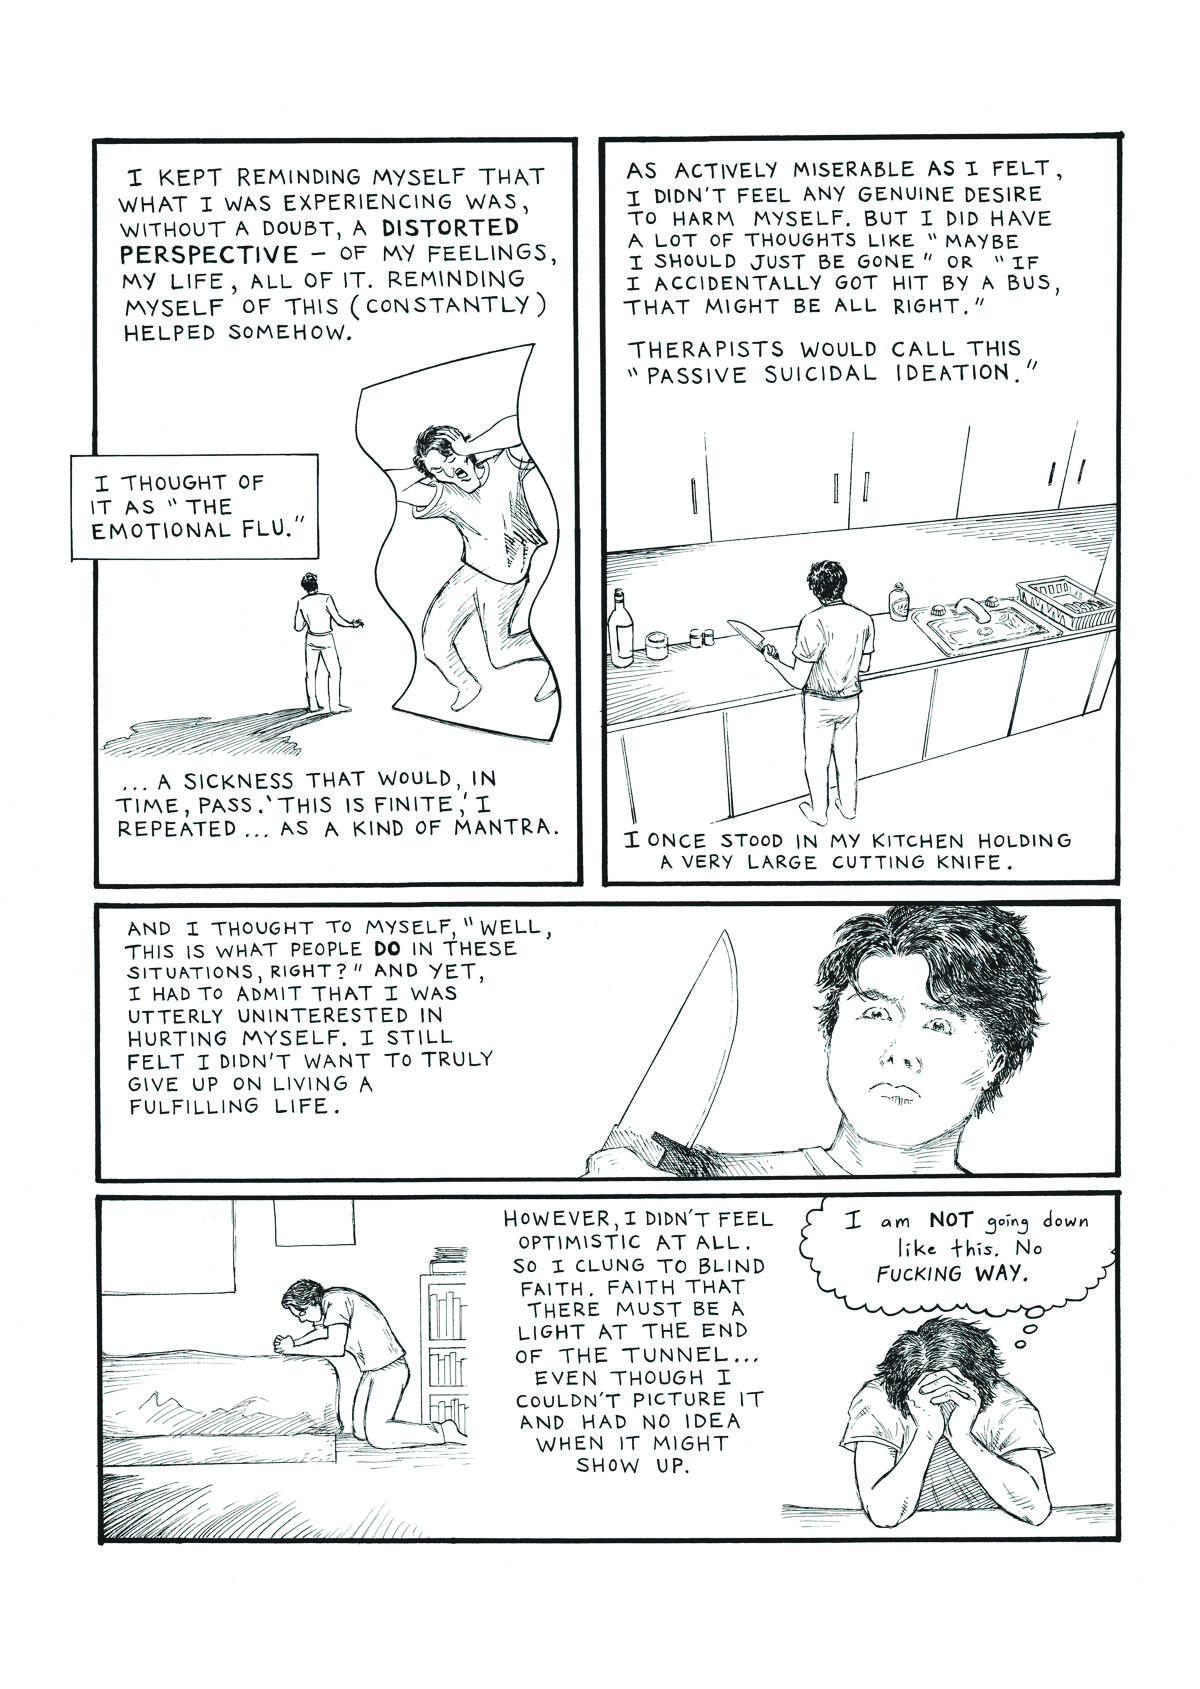 Tony Wolf Depression Comic p4 (1)